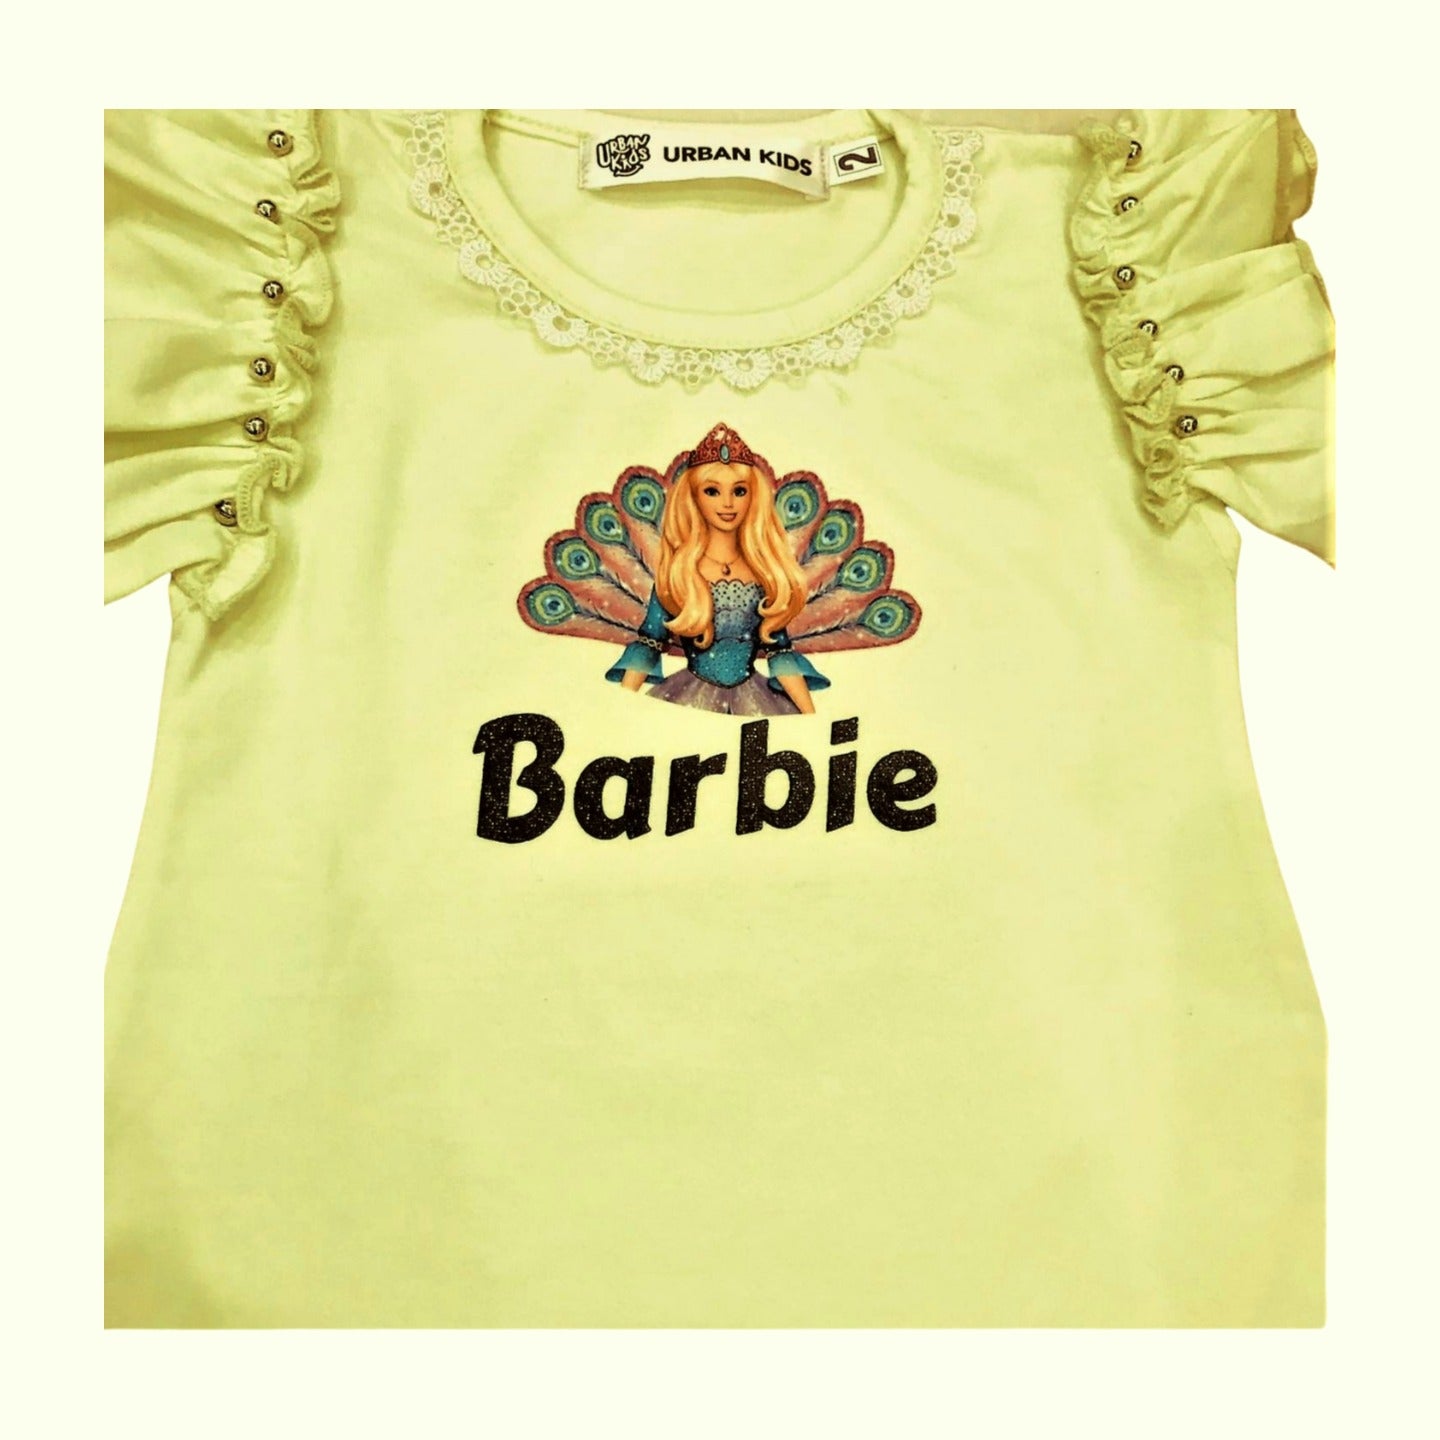 Barbie Shirt & Skirt